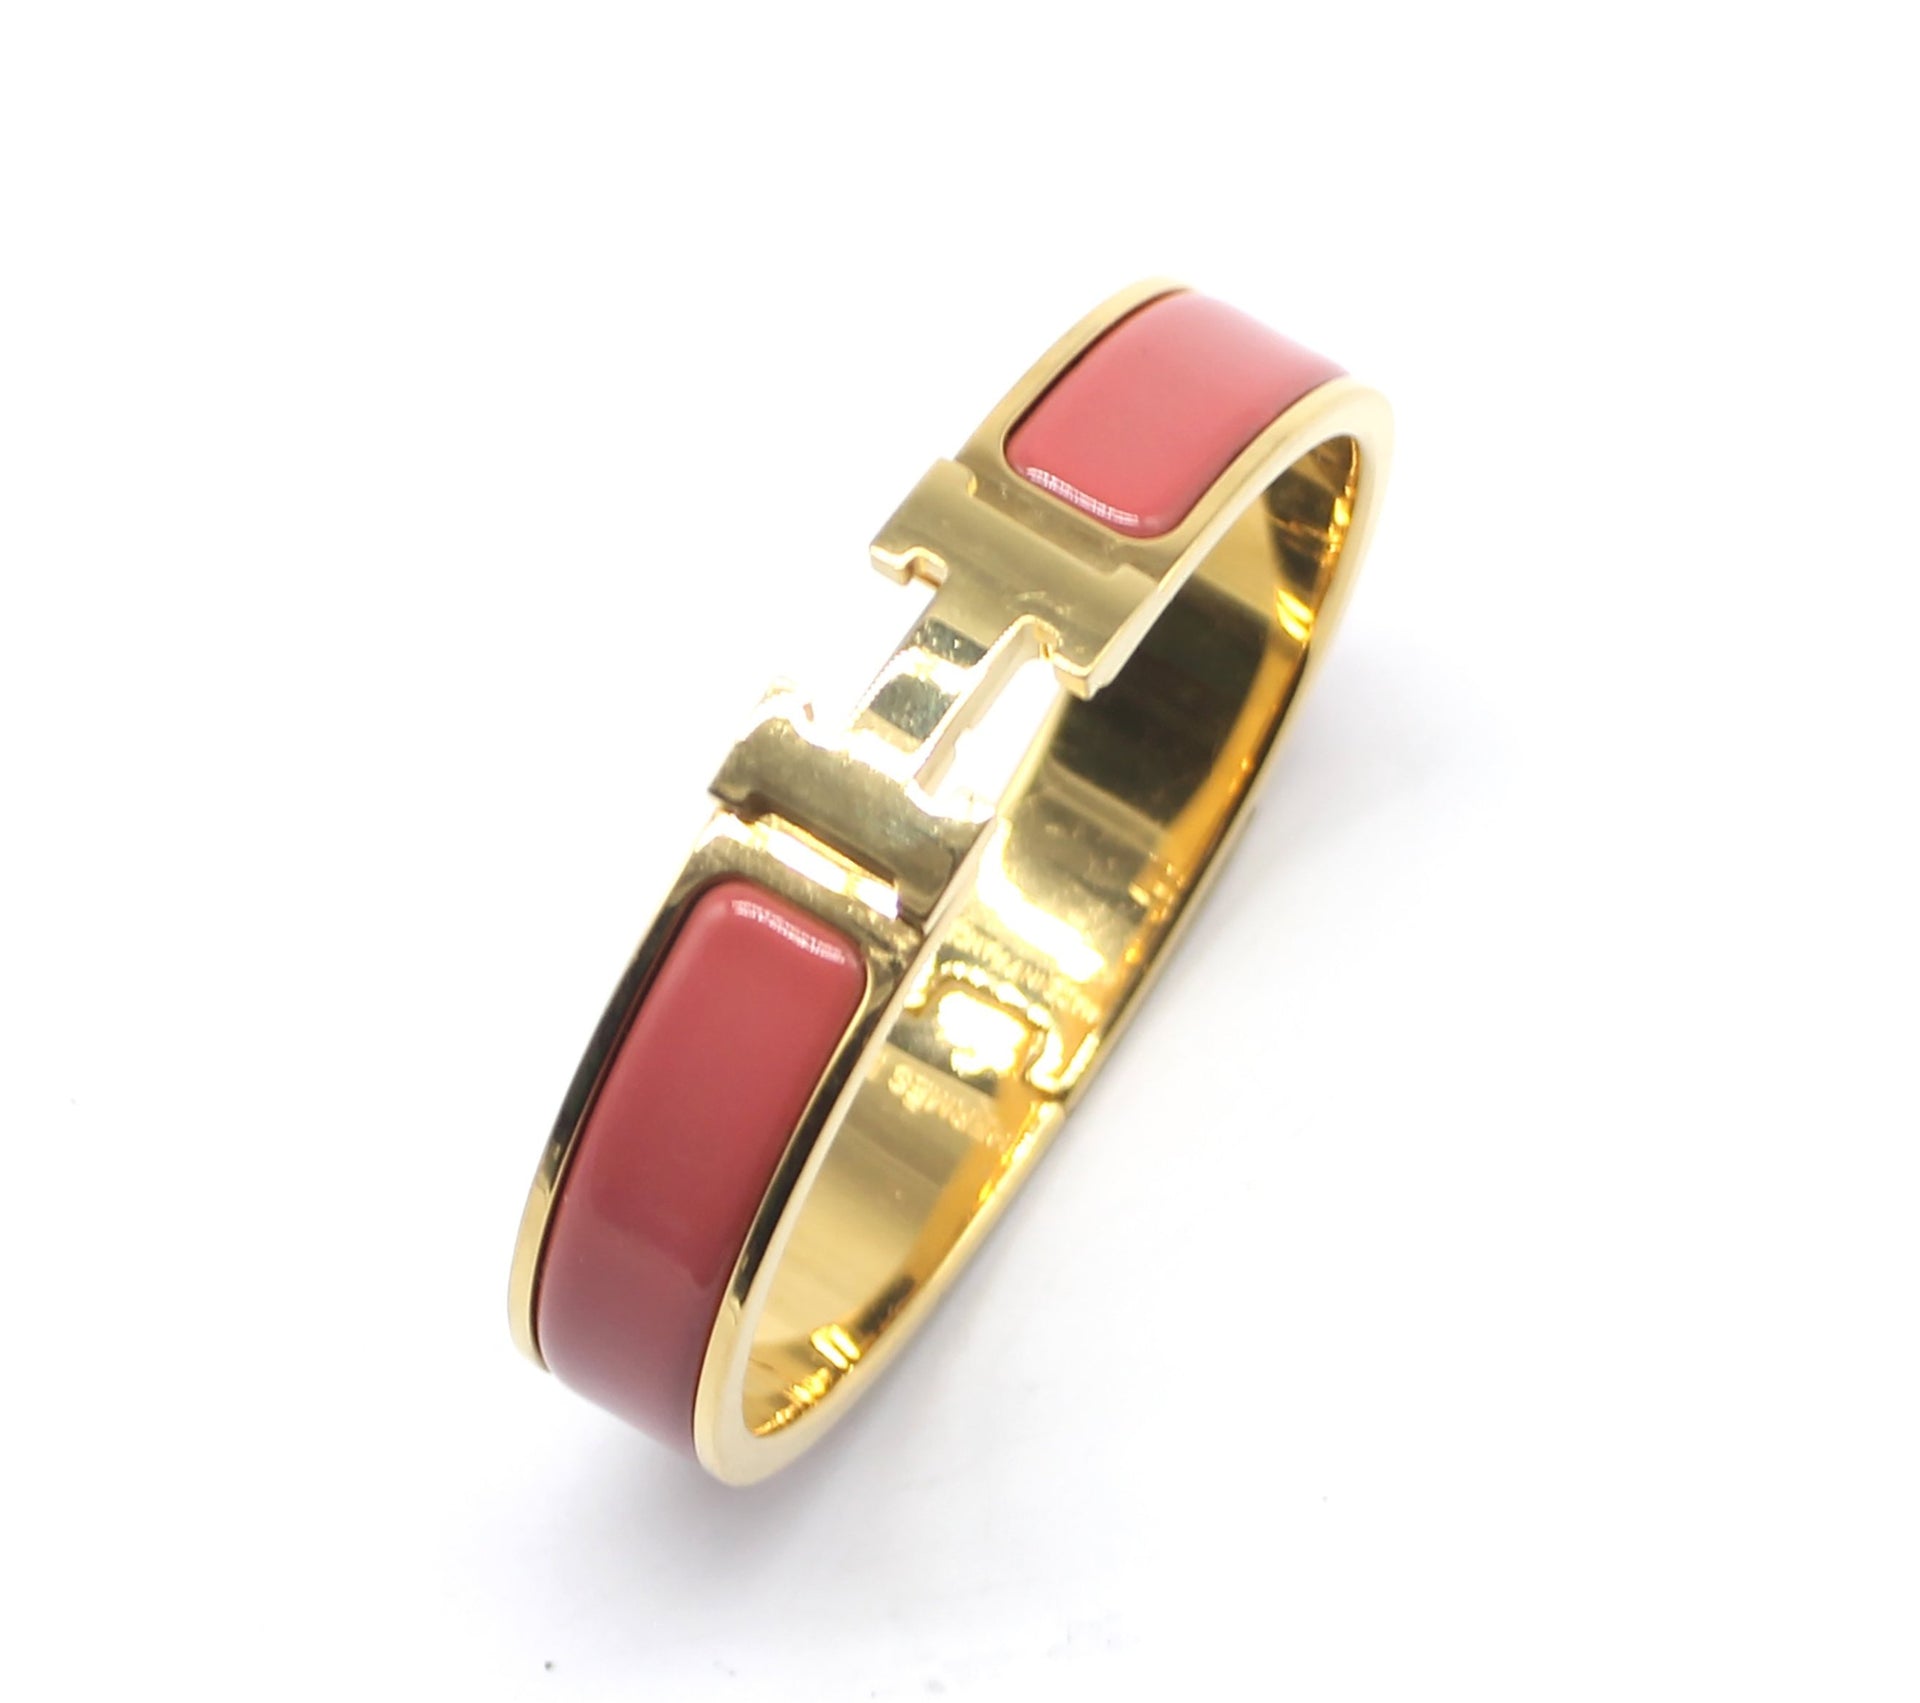 Clic h bracelet Hermès Pink in Metal - 19481398